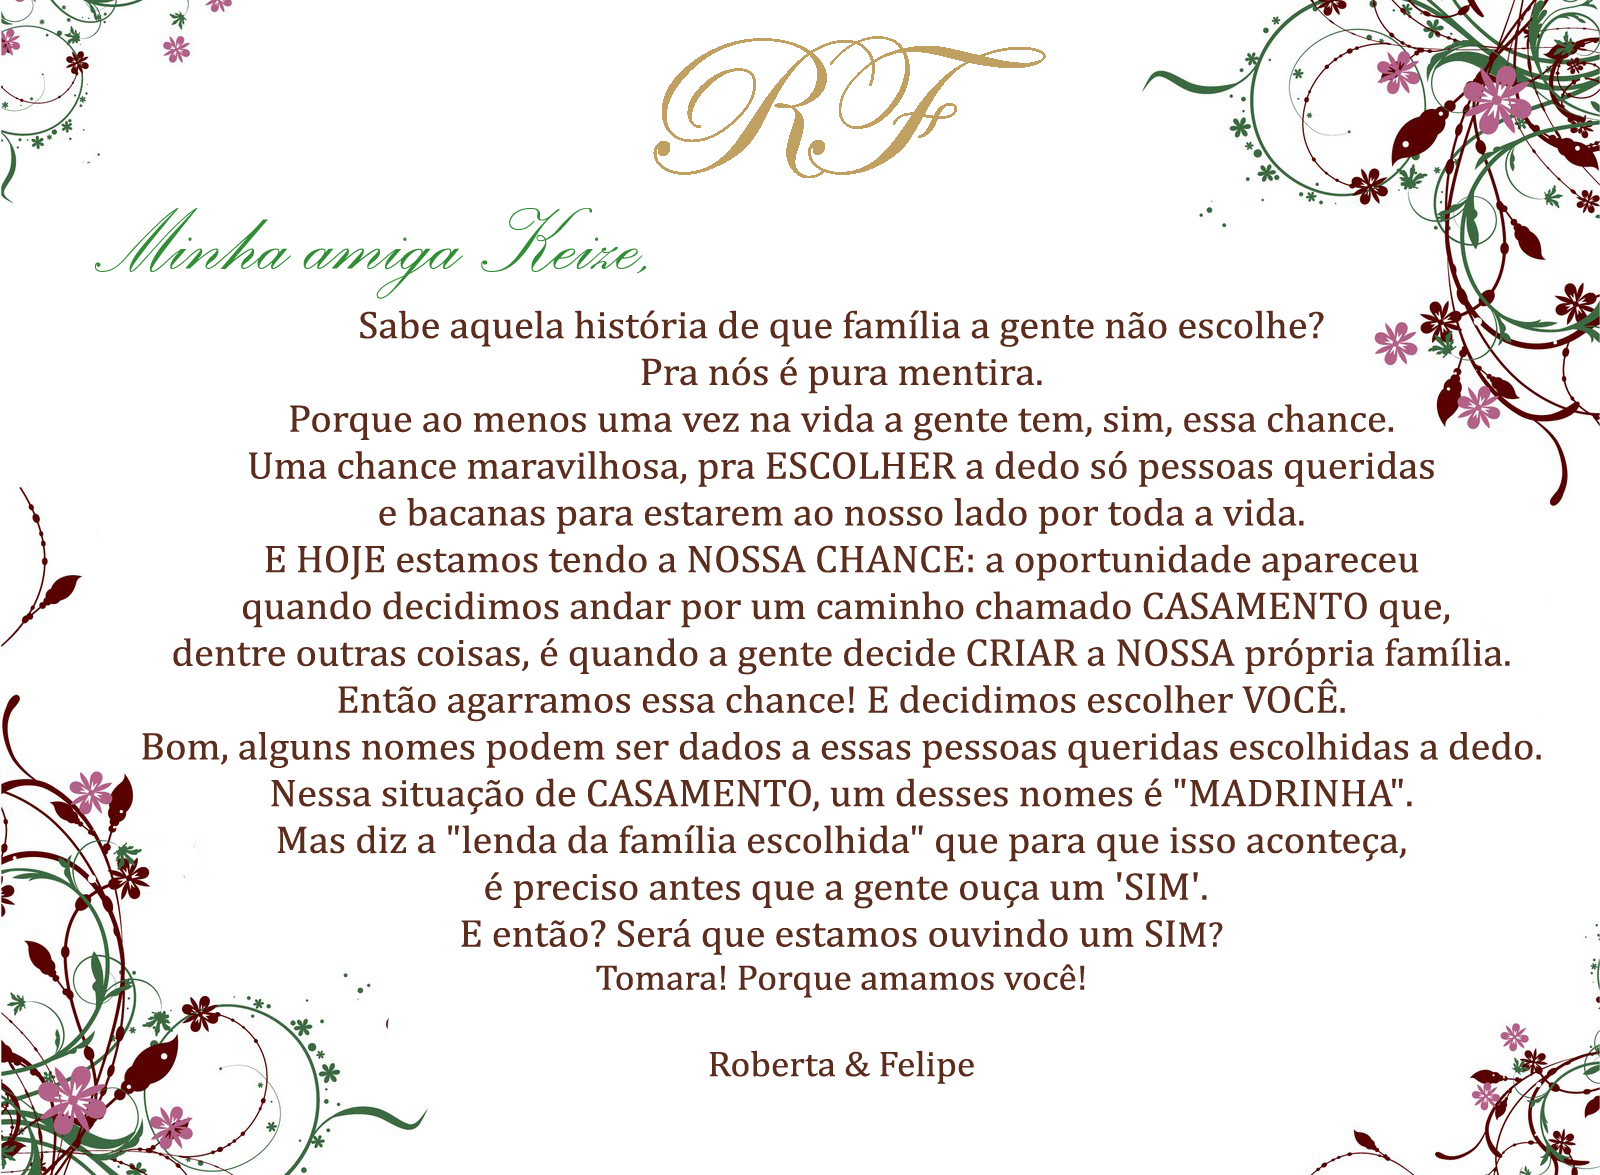 Felipe e Roberta: Convite dos Padrinhos